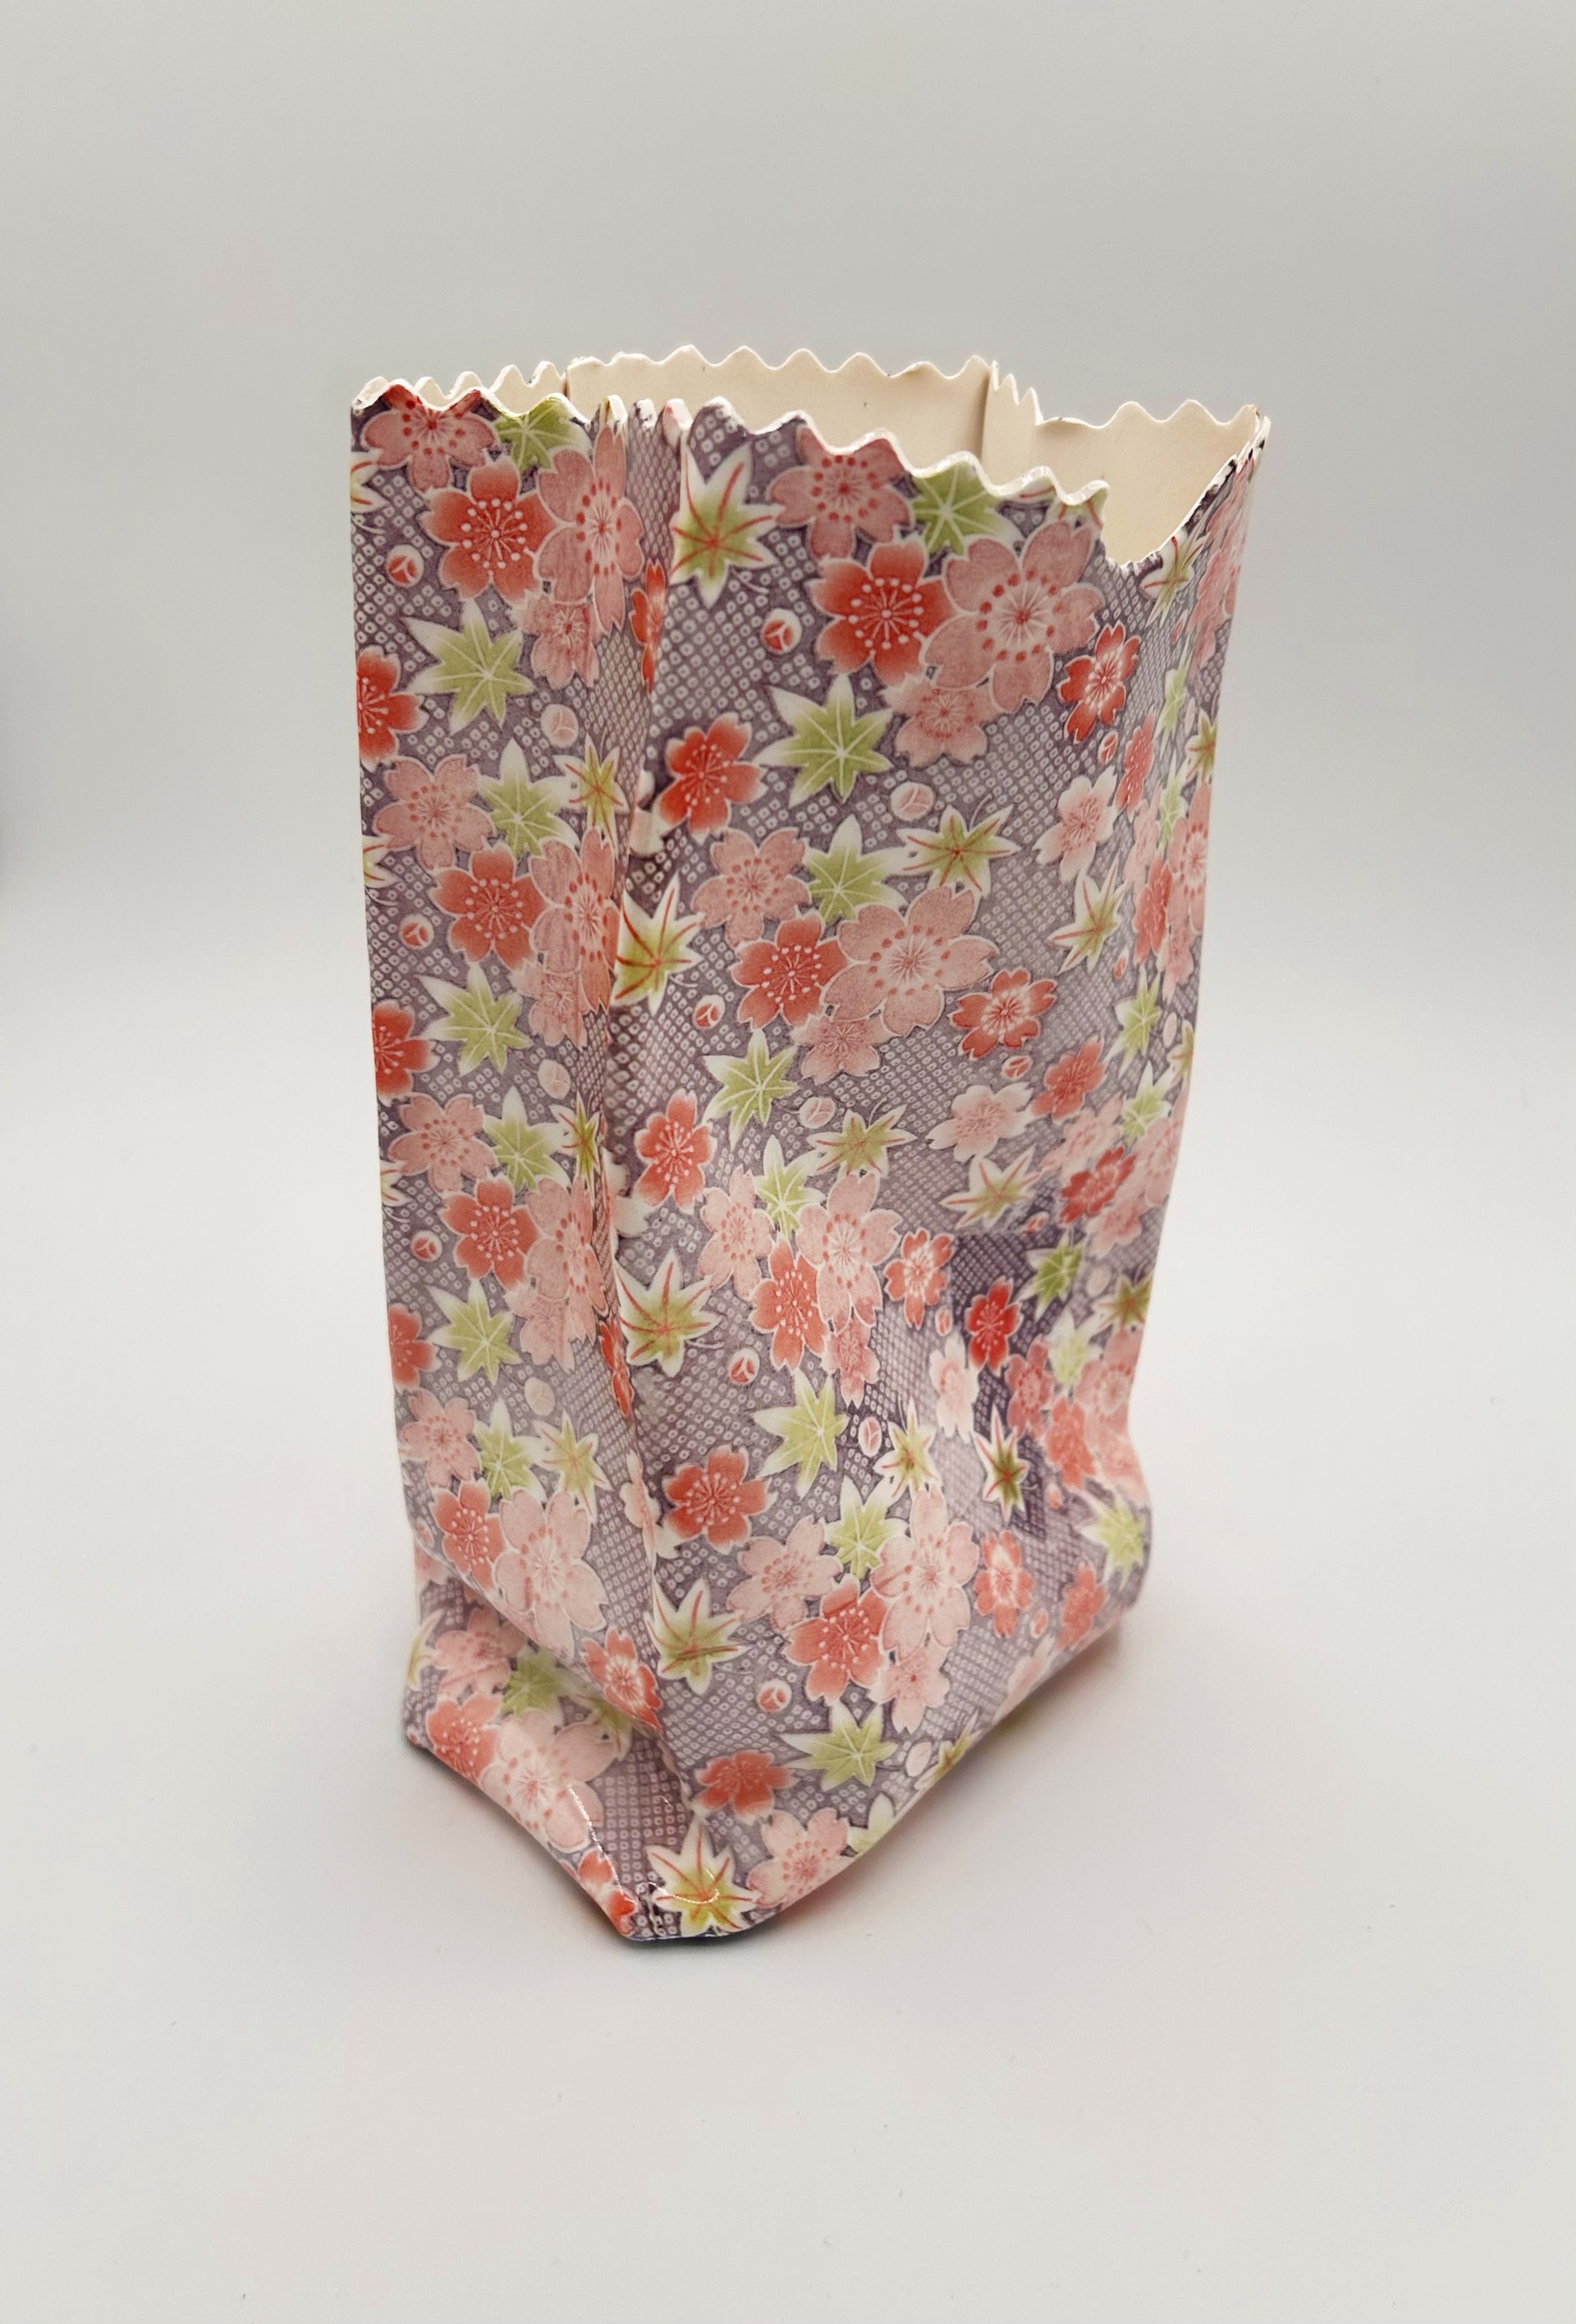 Cherry Blossom Paper Bag by Chandra Beadleston